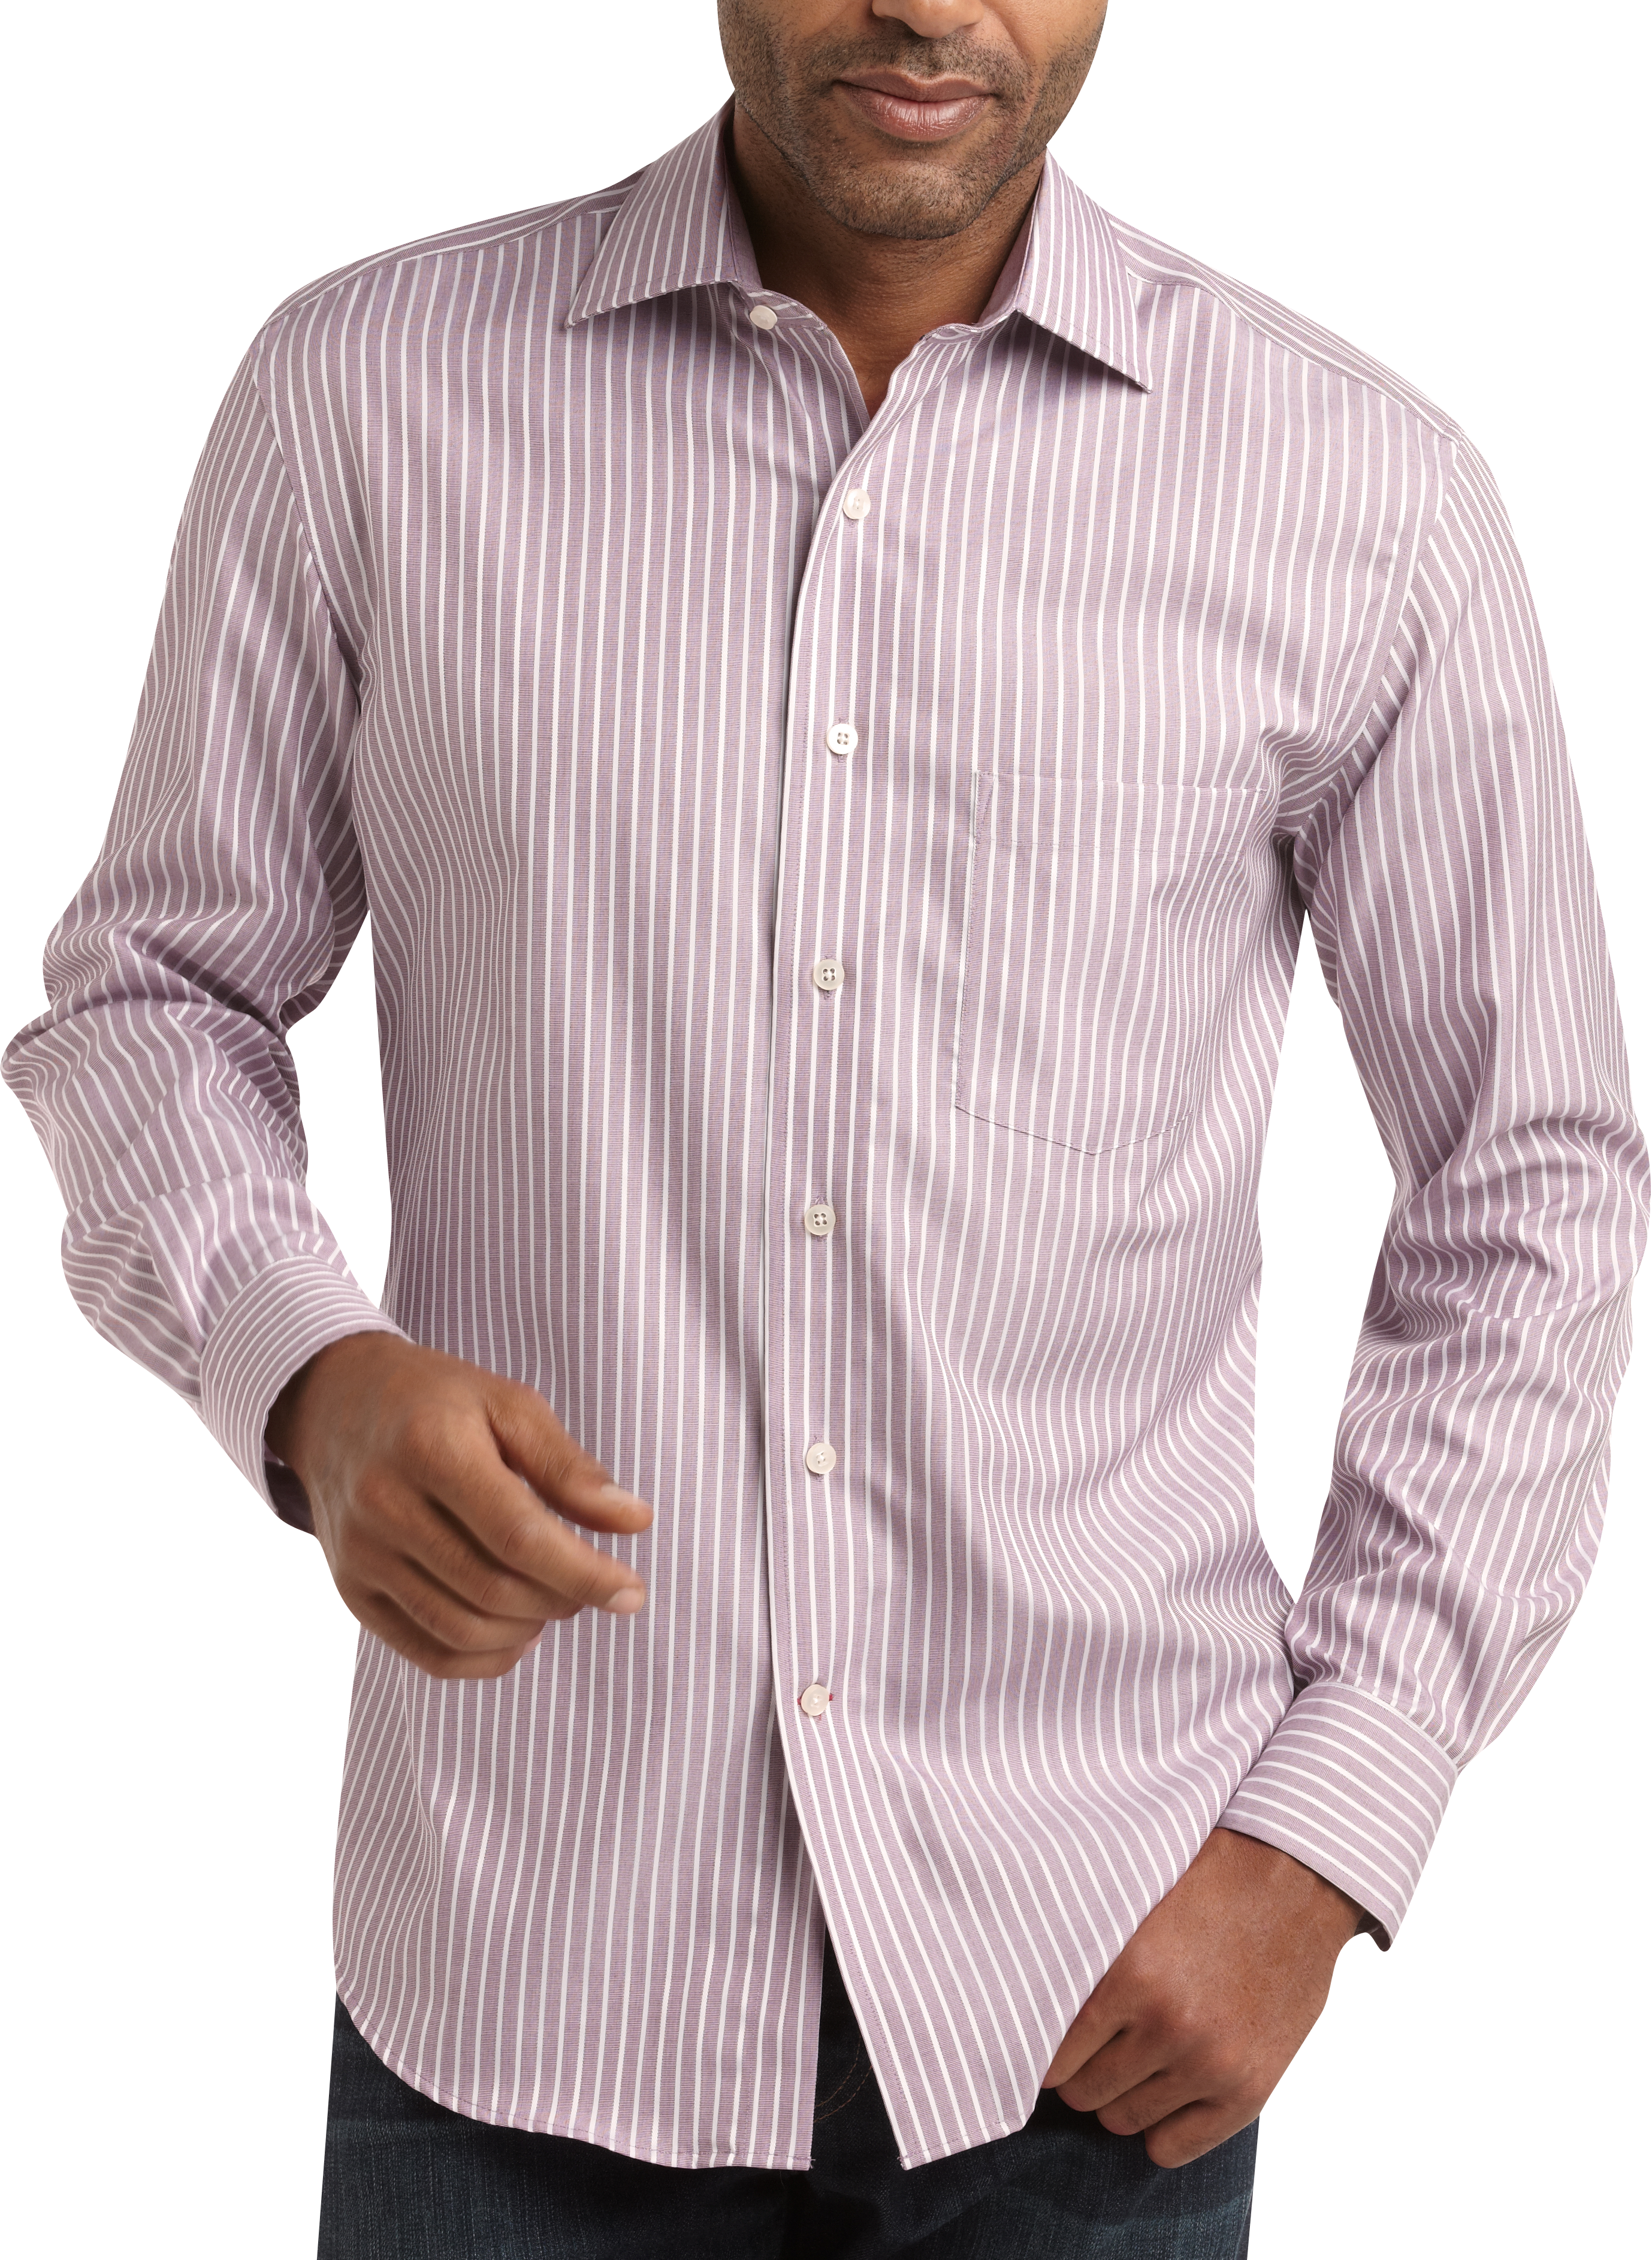 Egara Burgundy Stripe Sport Shirt - Men's Shirts | Men's Wearhouse